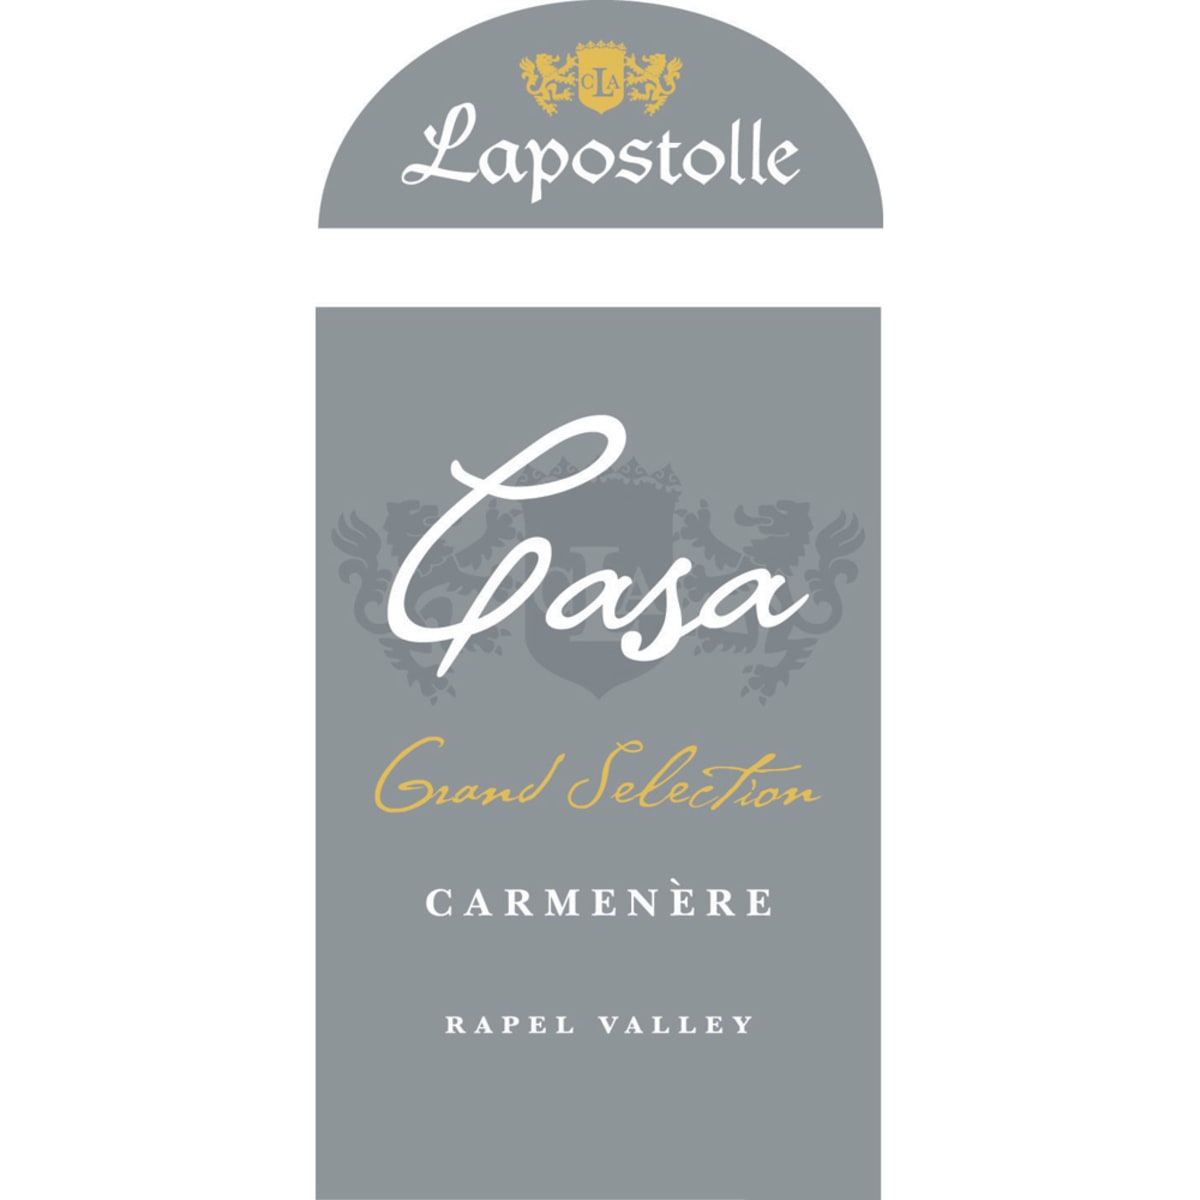 Lapostolle Grand Selection Carmenere 2010 Front Label